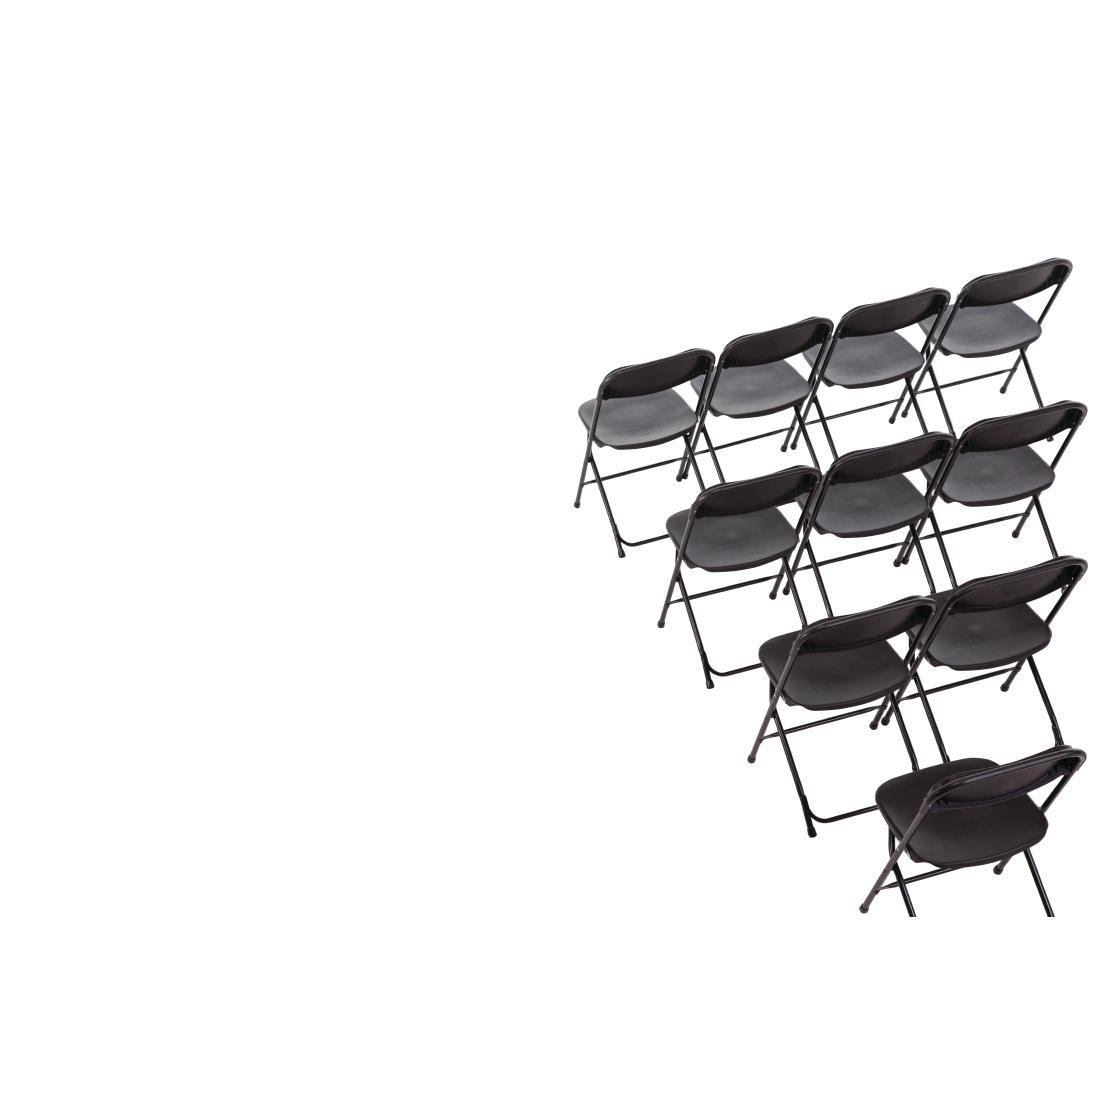 Bolero PP Folding Chairs Black (Pack of 10) - GD386  - 7